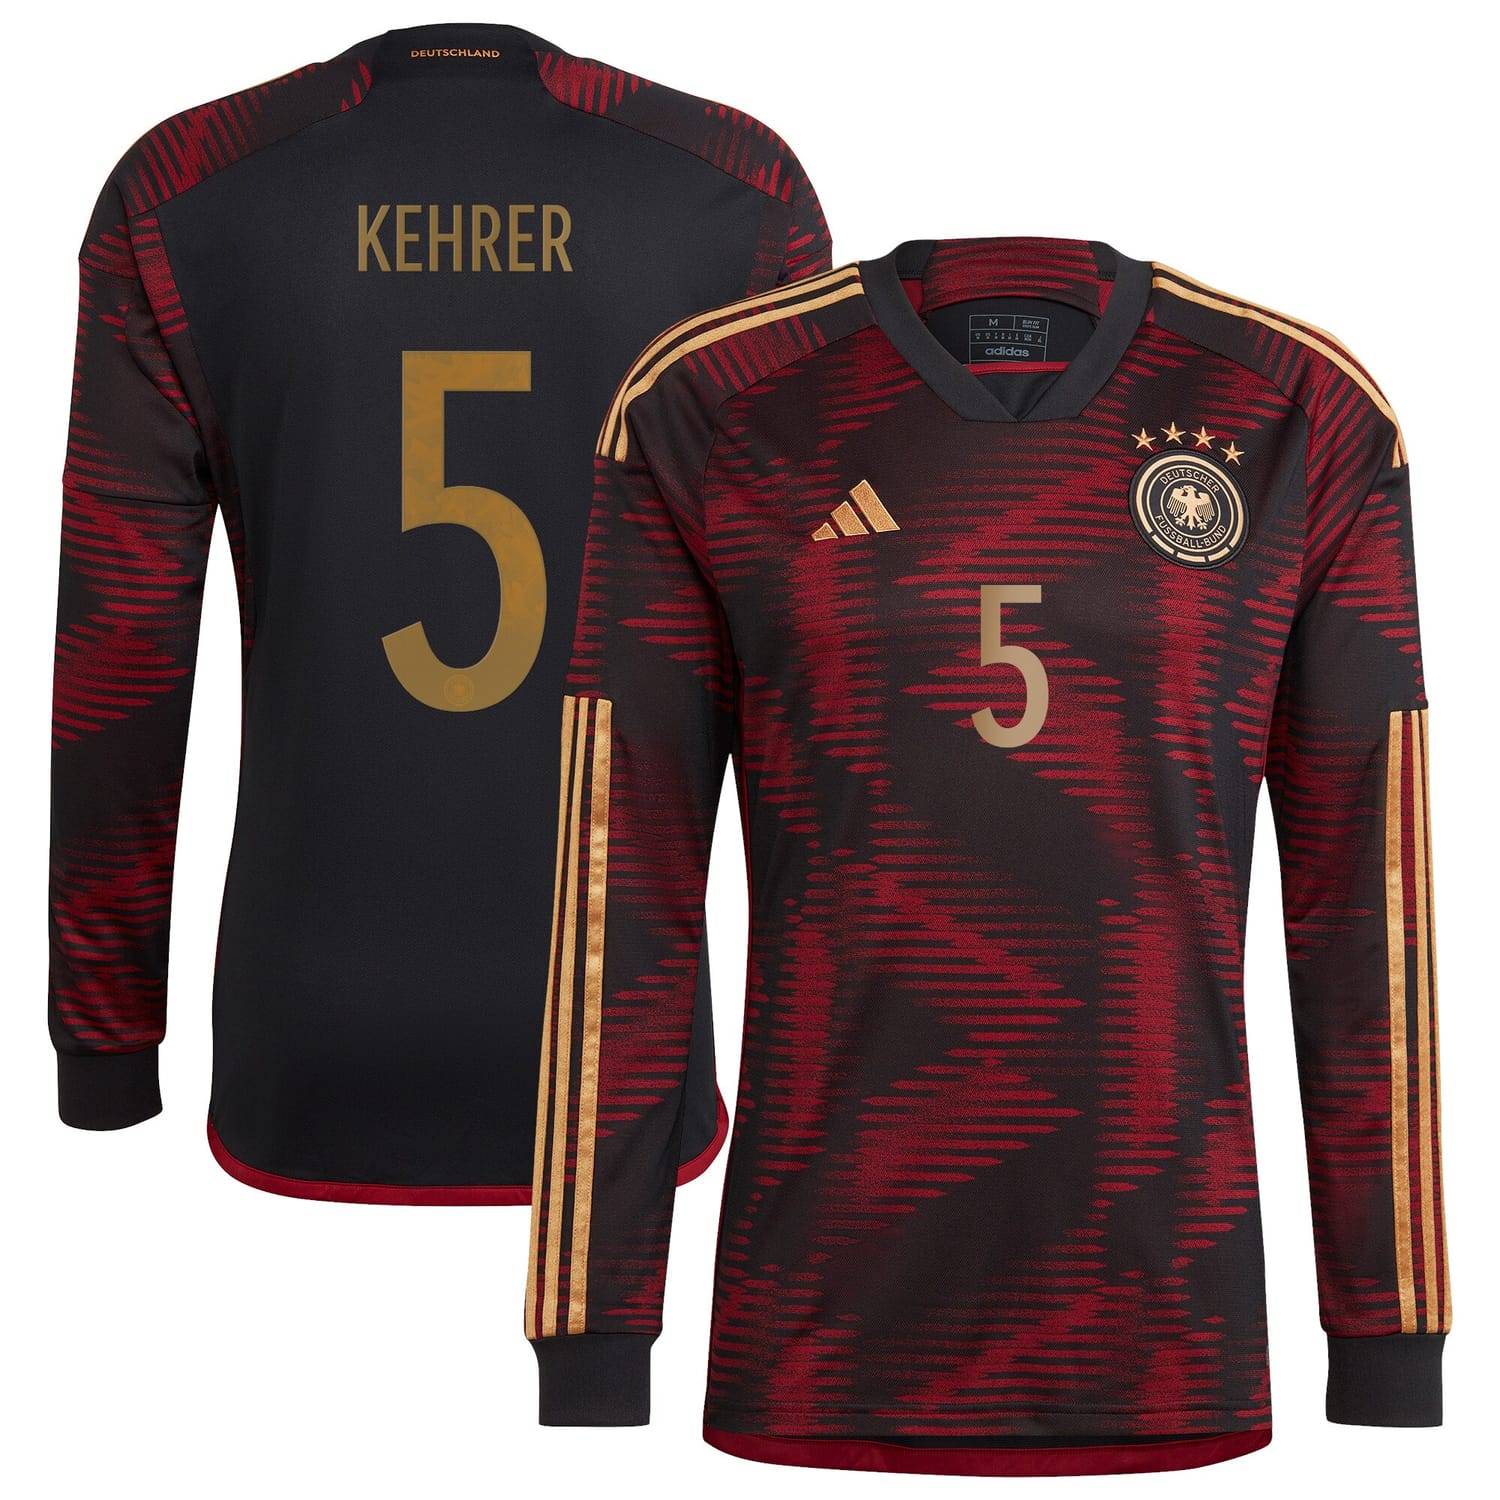 Germany National Team Away Jersey Shirt Long Sleeve player Kehrer 5 printing for Men